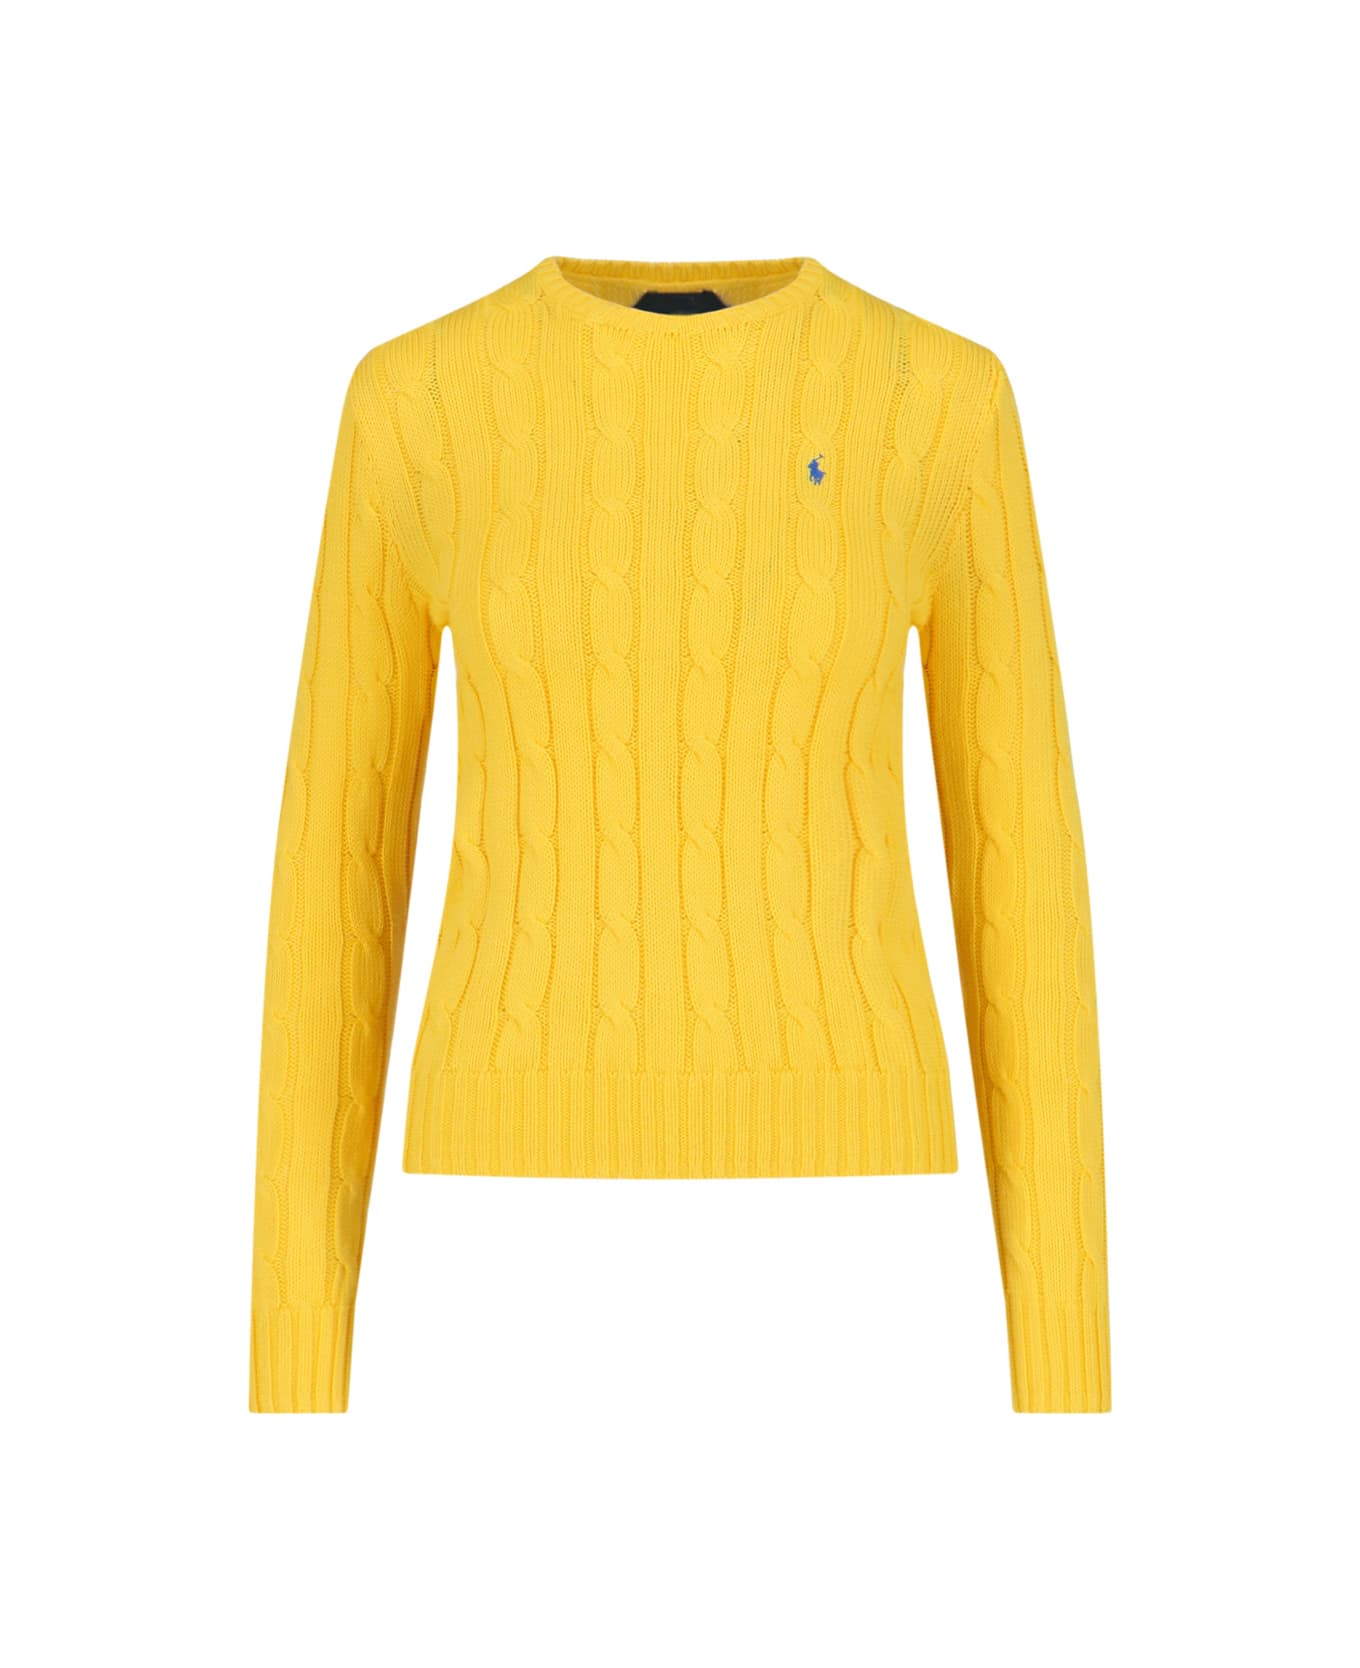 Polo Ralph Lauren Logo Crew Neck Sweater - Yellow